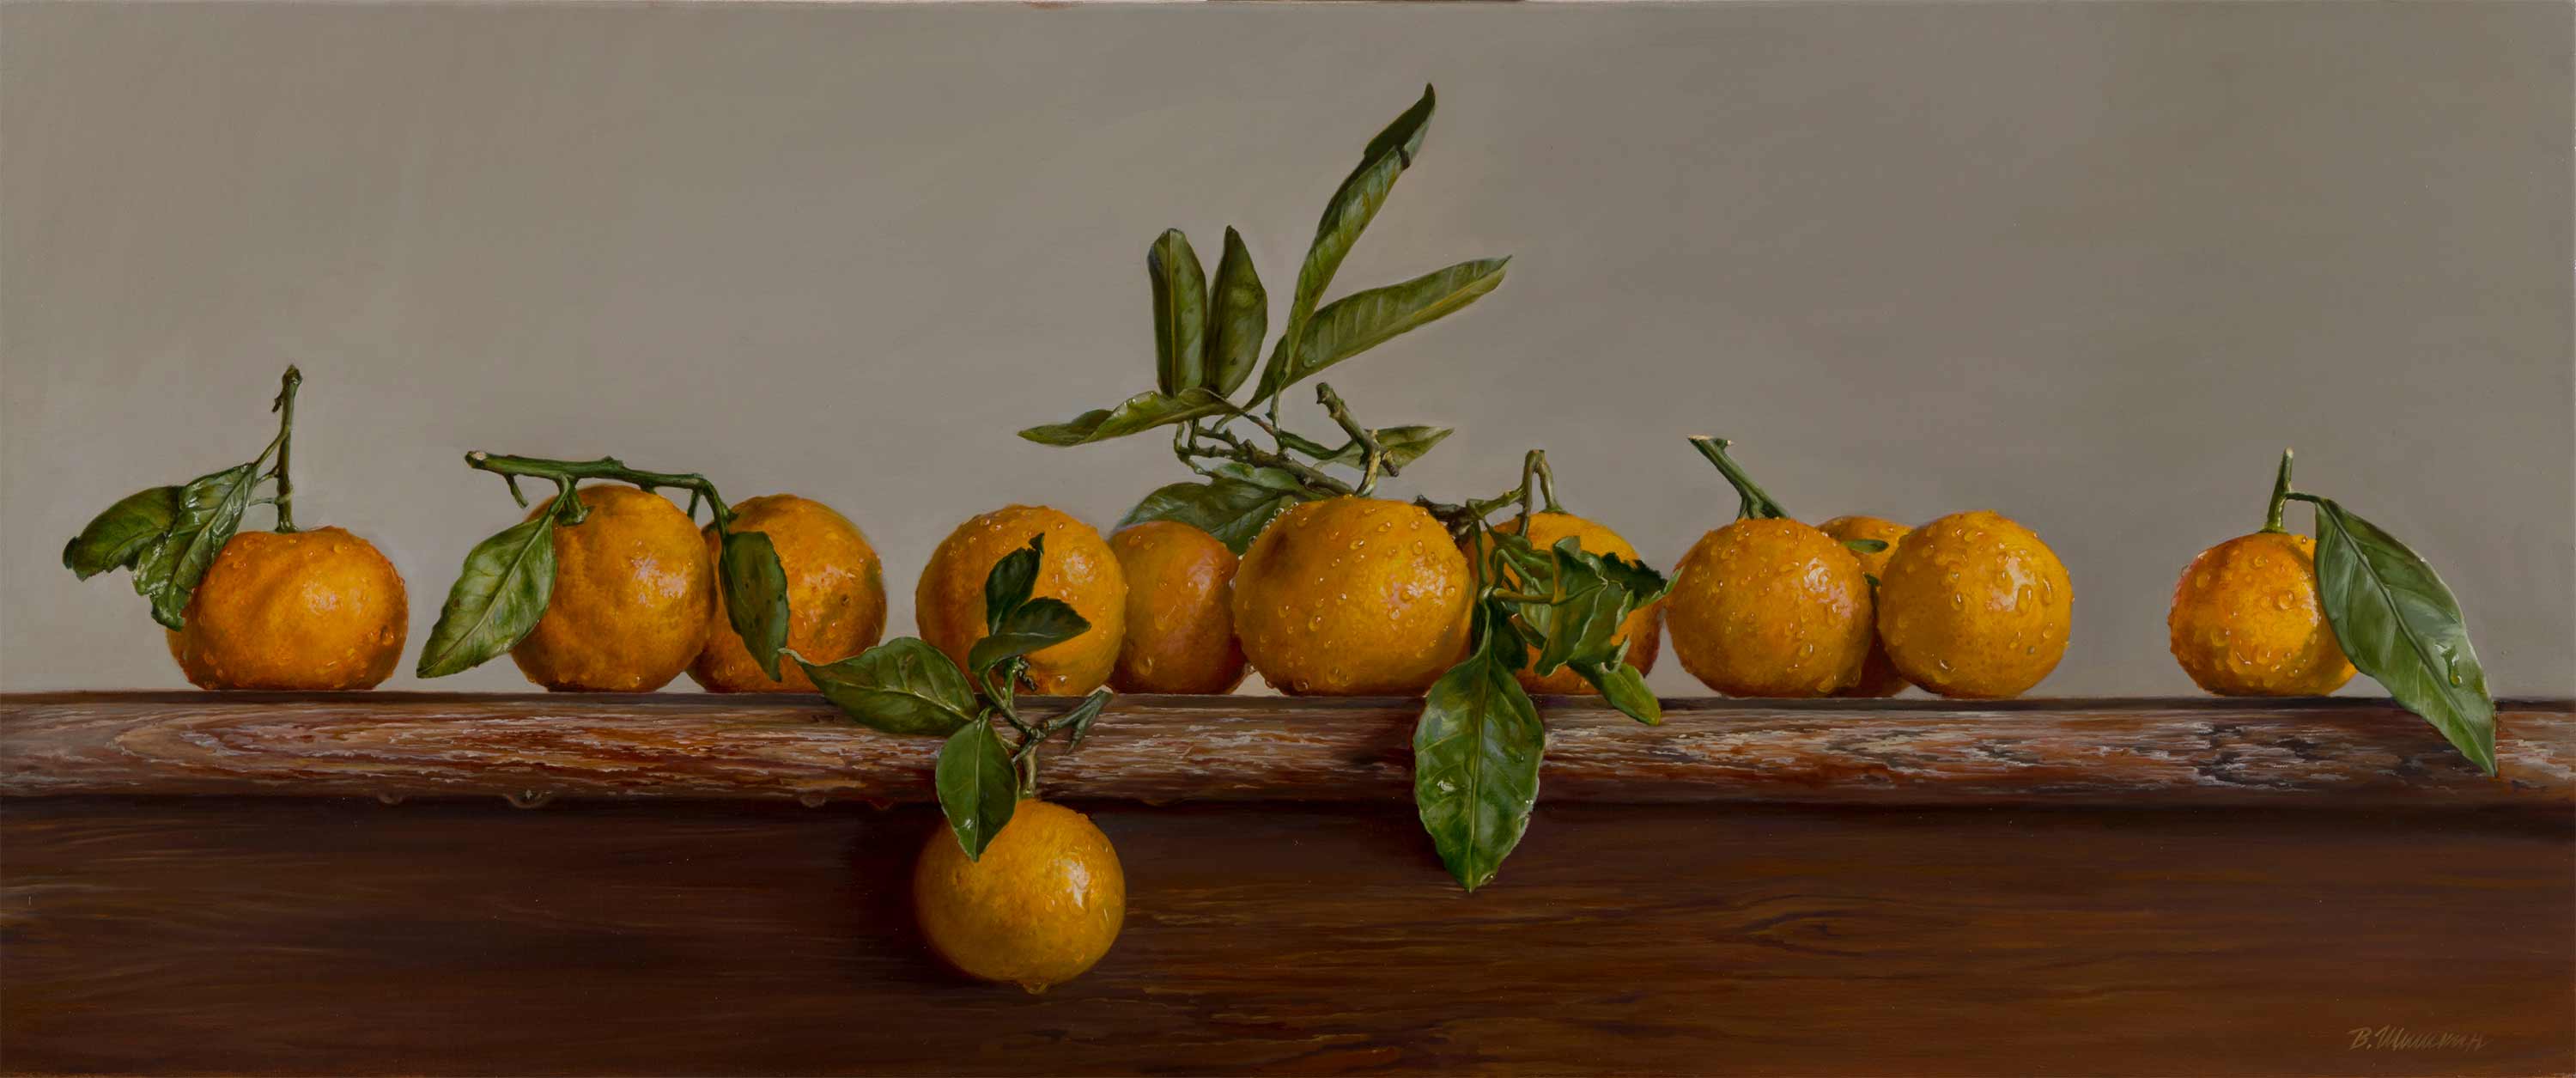 Mandarins, Valery Shishkin, Buy the painting Oil